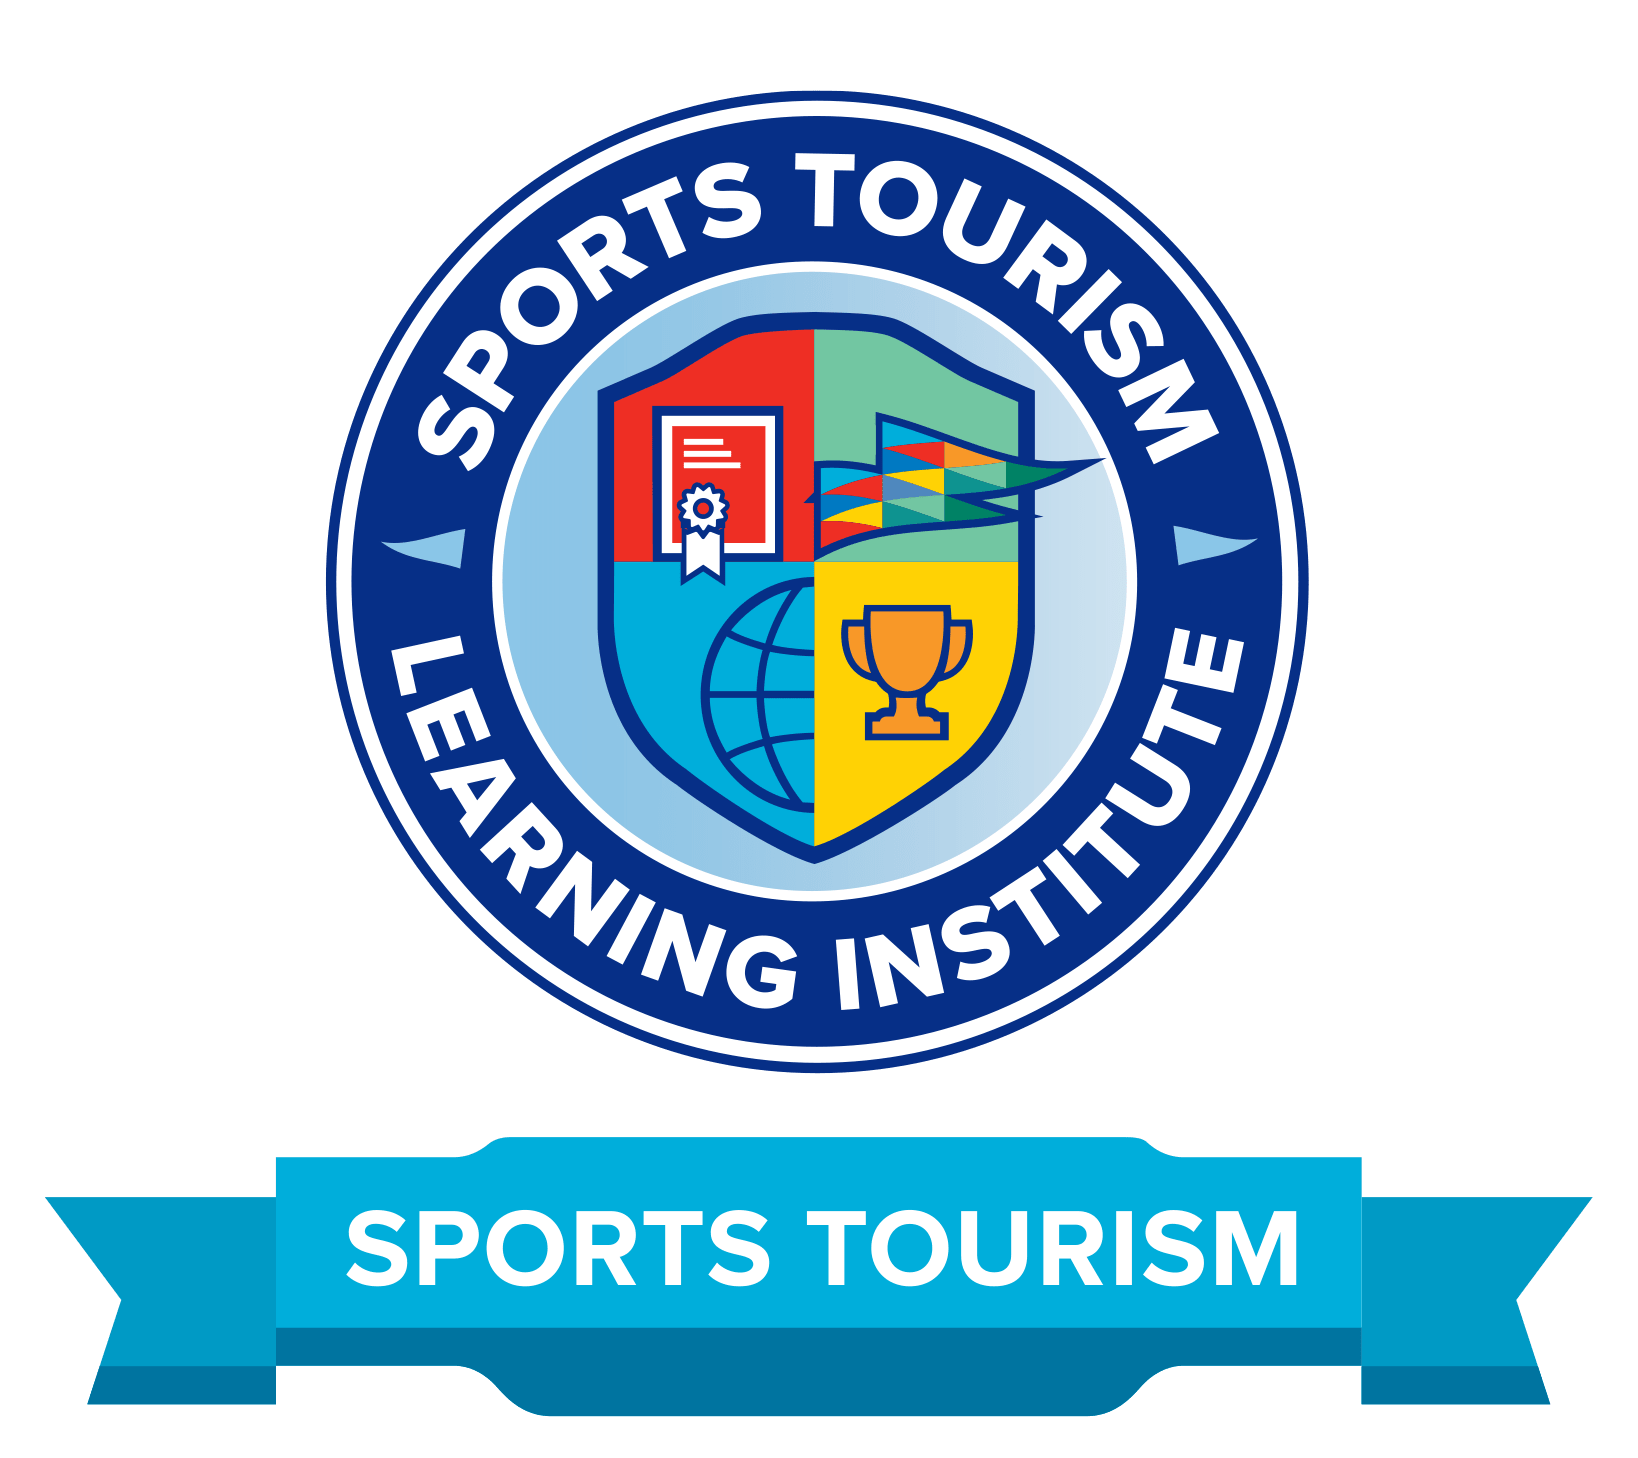 definition of sport tourism